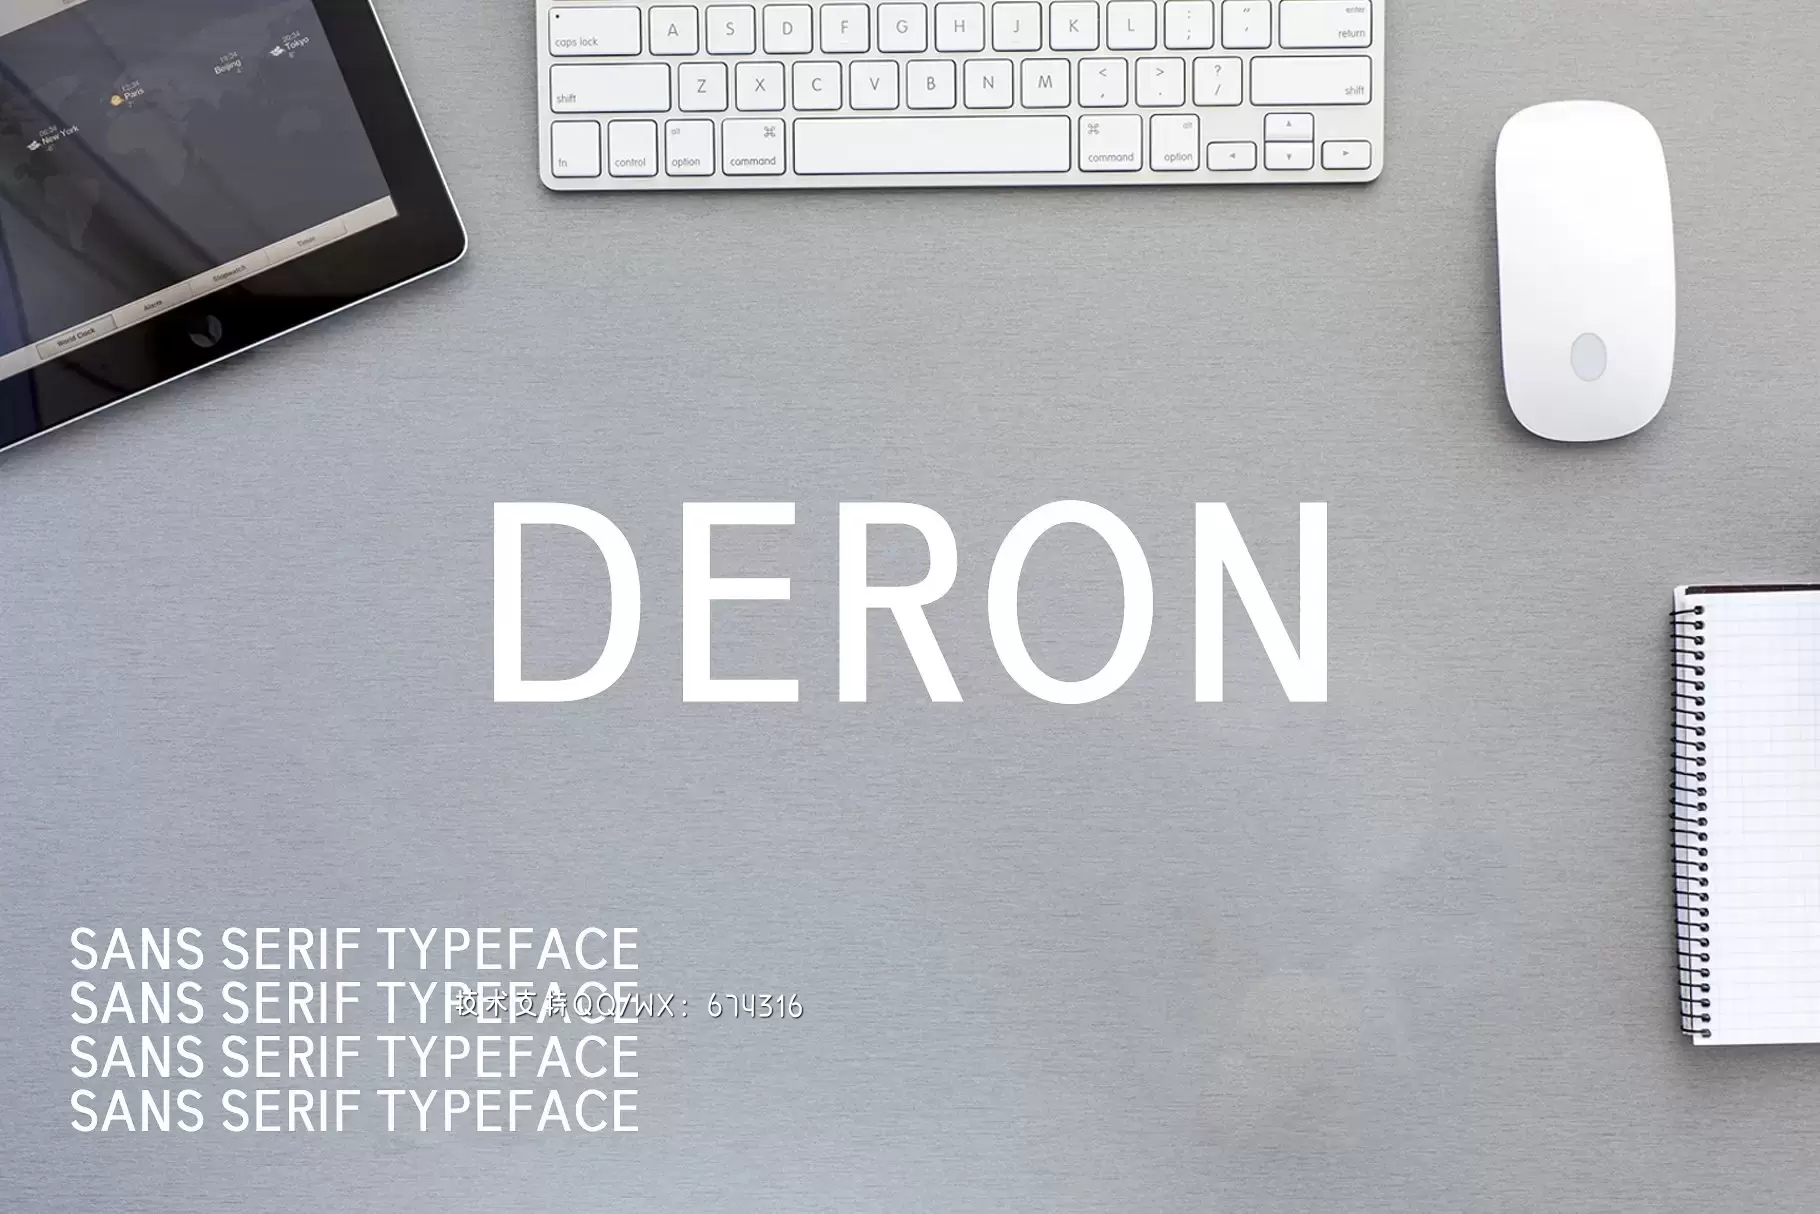 简单时尚设计字体 Deron Sans Serif 10 Font Family Pack免费下载